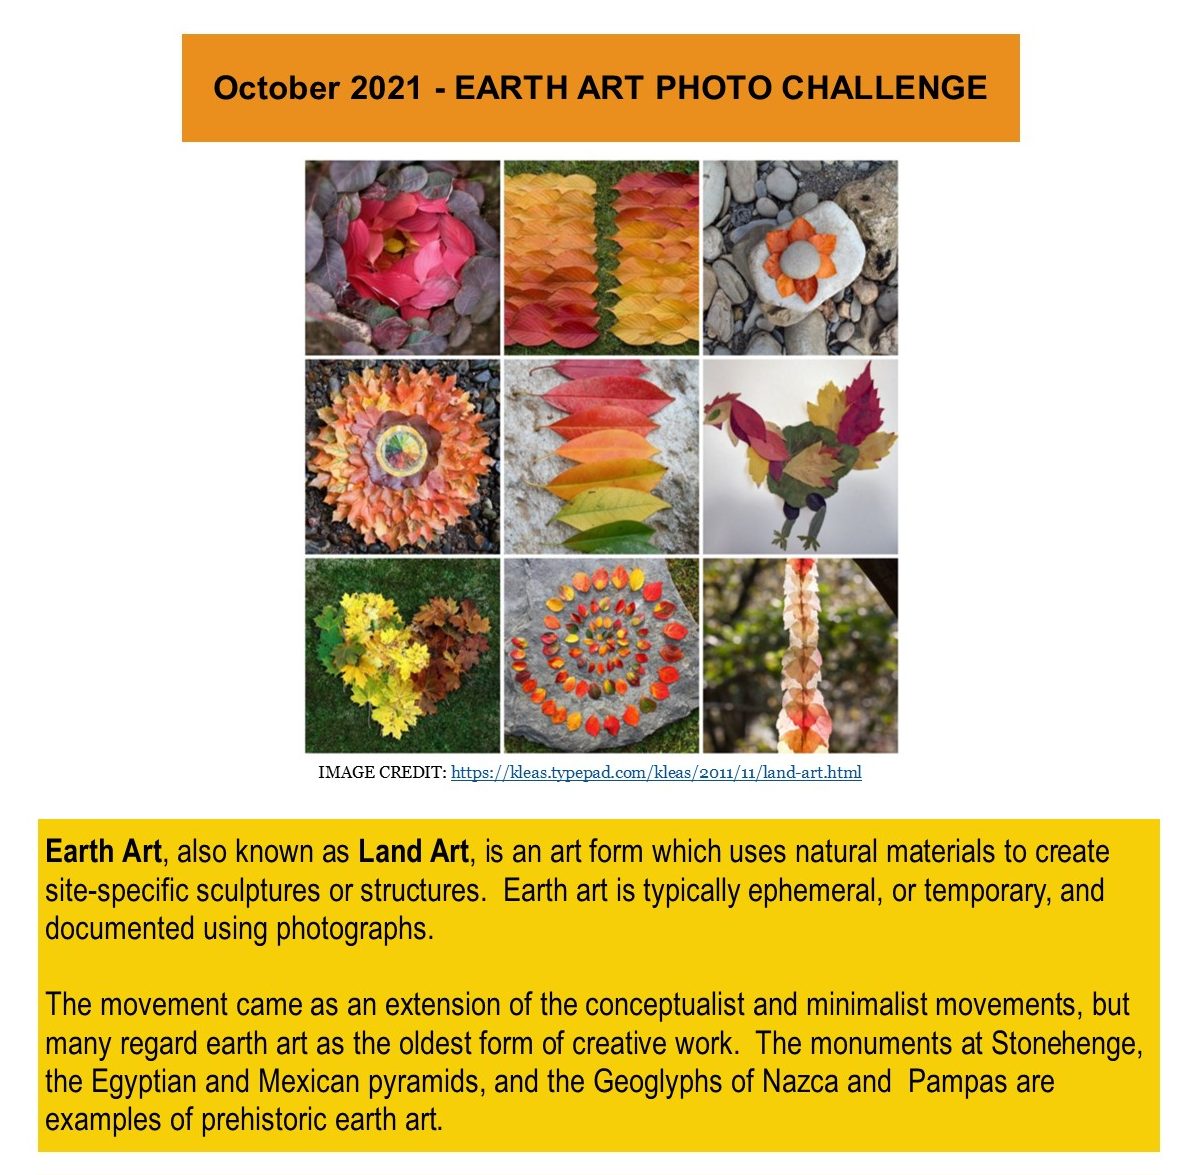 https://bbartcenter.org/wp-content/uploads/2021/10/Earth-Art-Photo-Challenge-1-e1633450800706.jpg